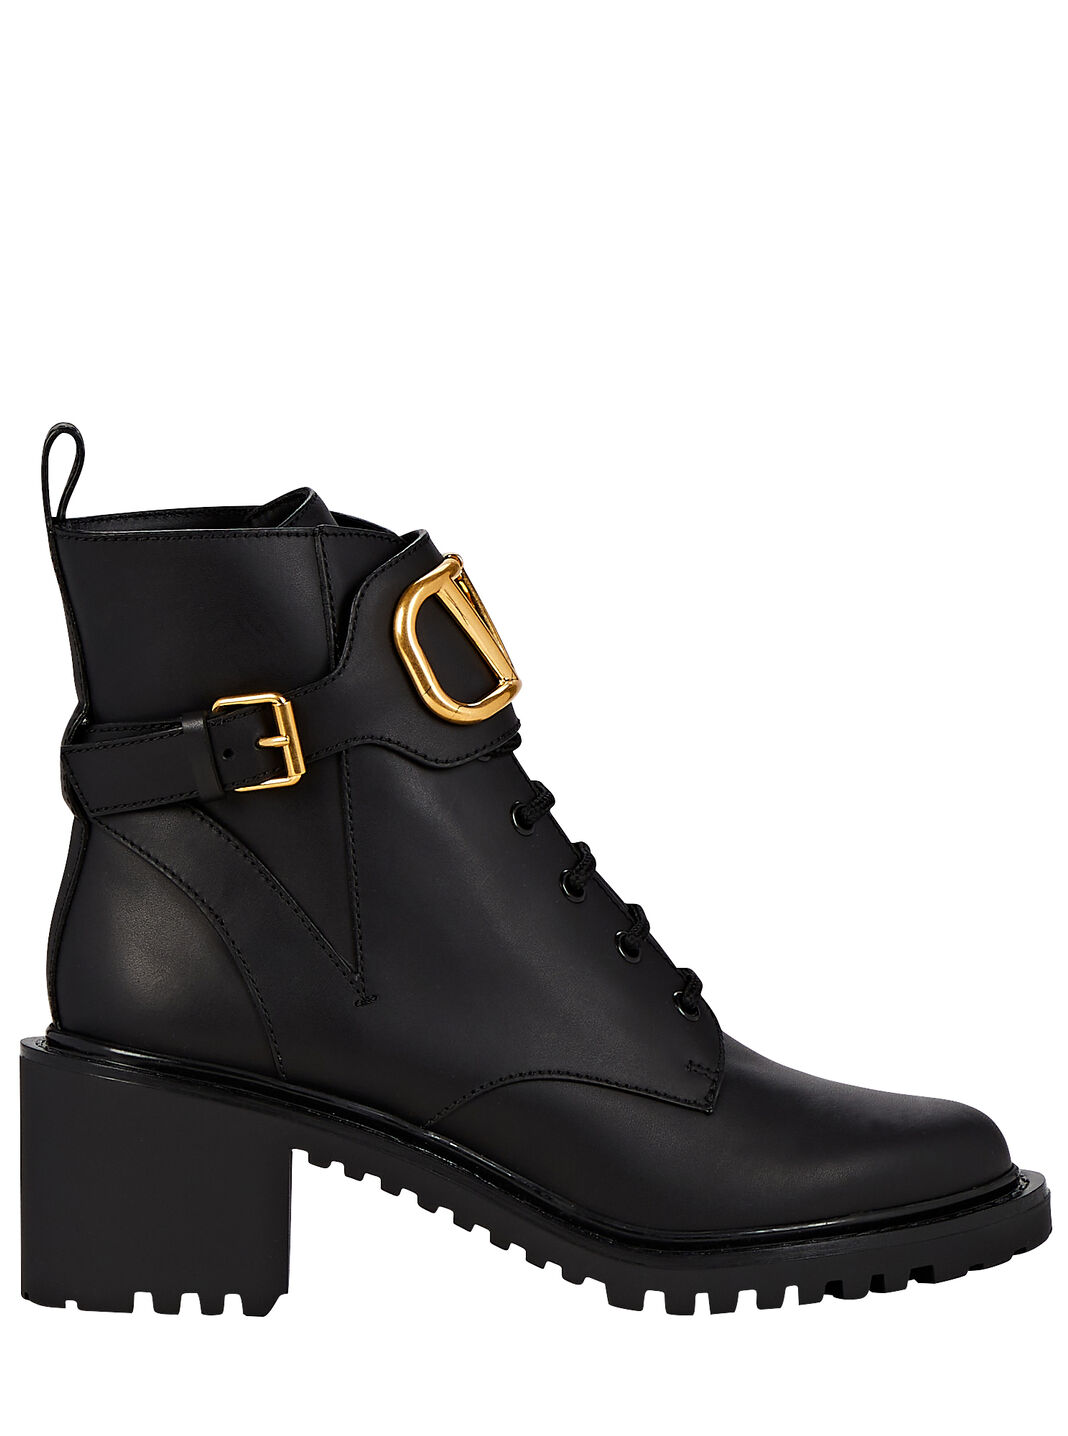 Black V-Logo 70 leather knee-high boots, Valentino Garavani